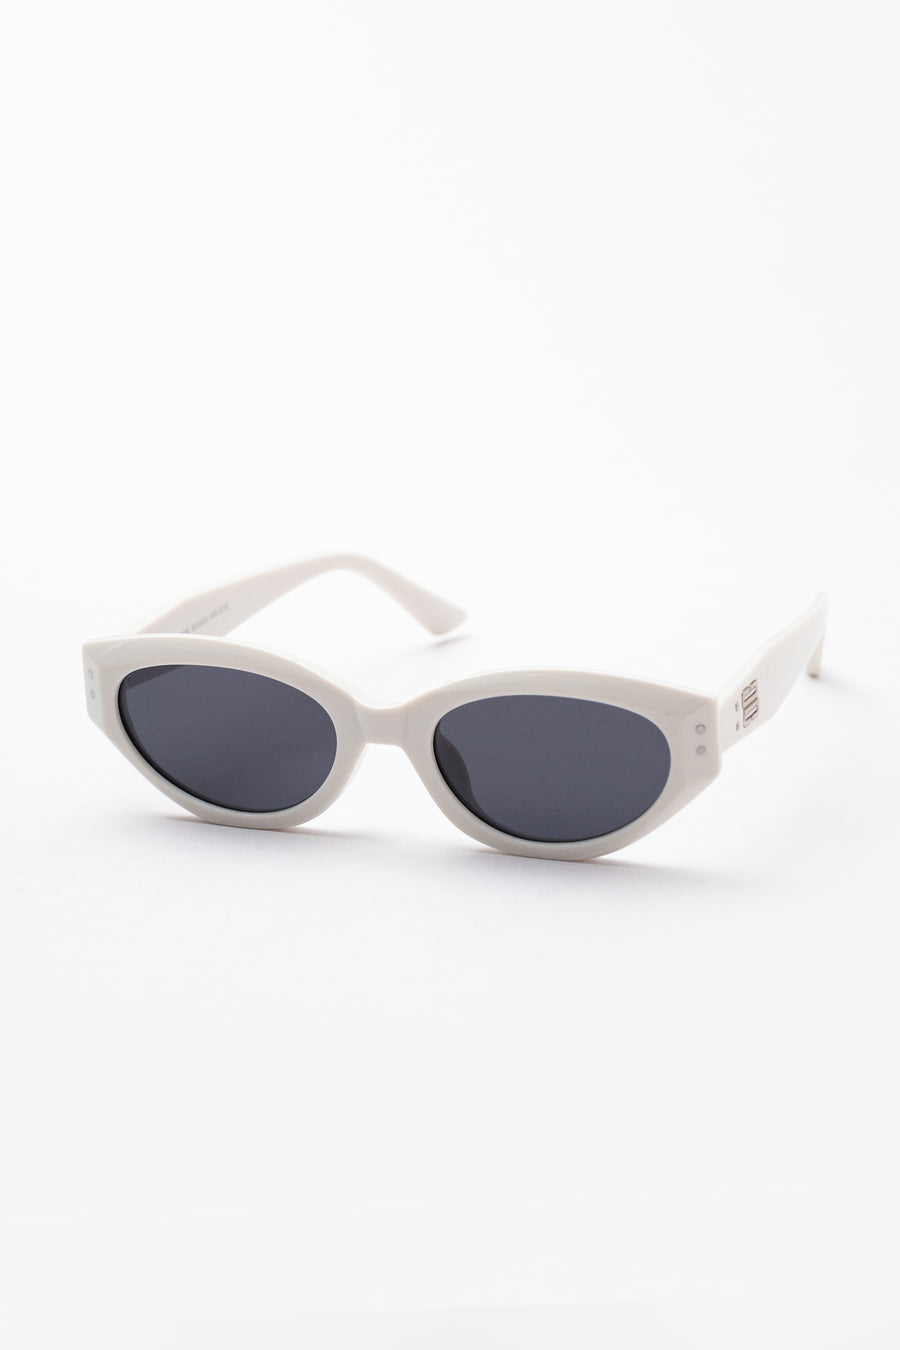 Rodney Sunglasses White/Smoke Lens